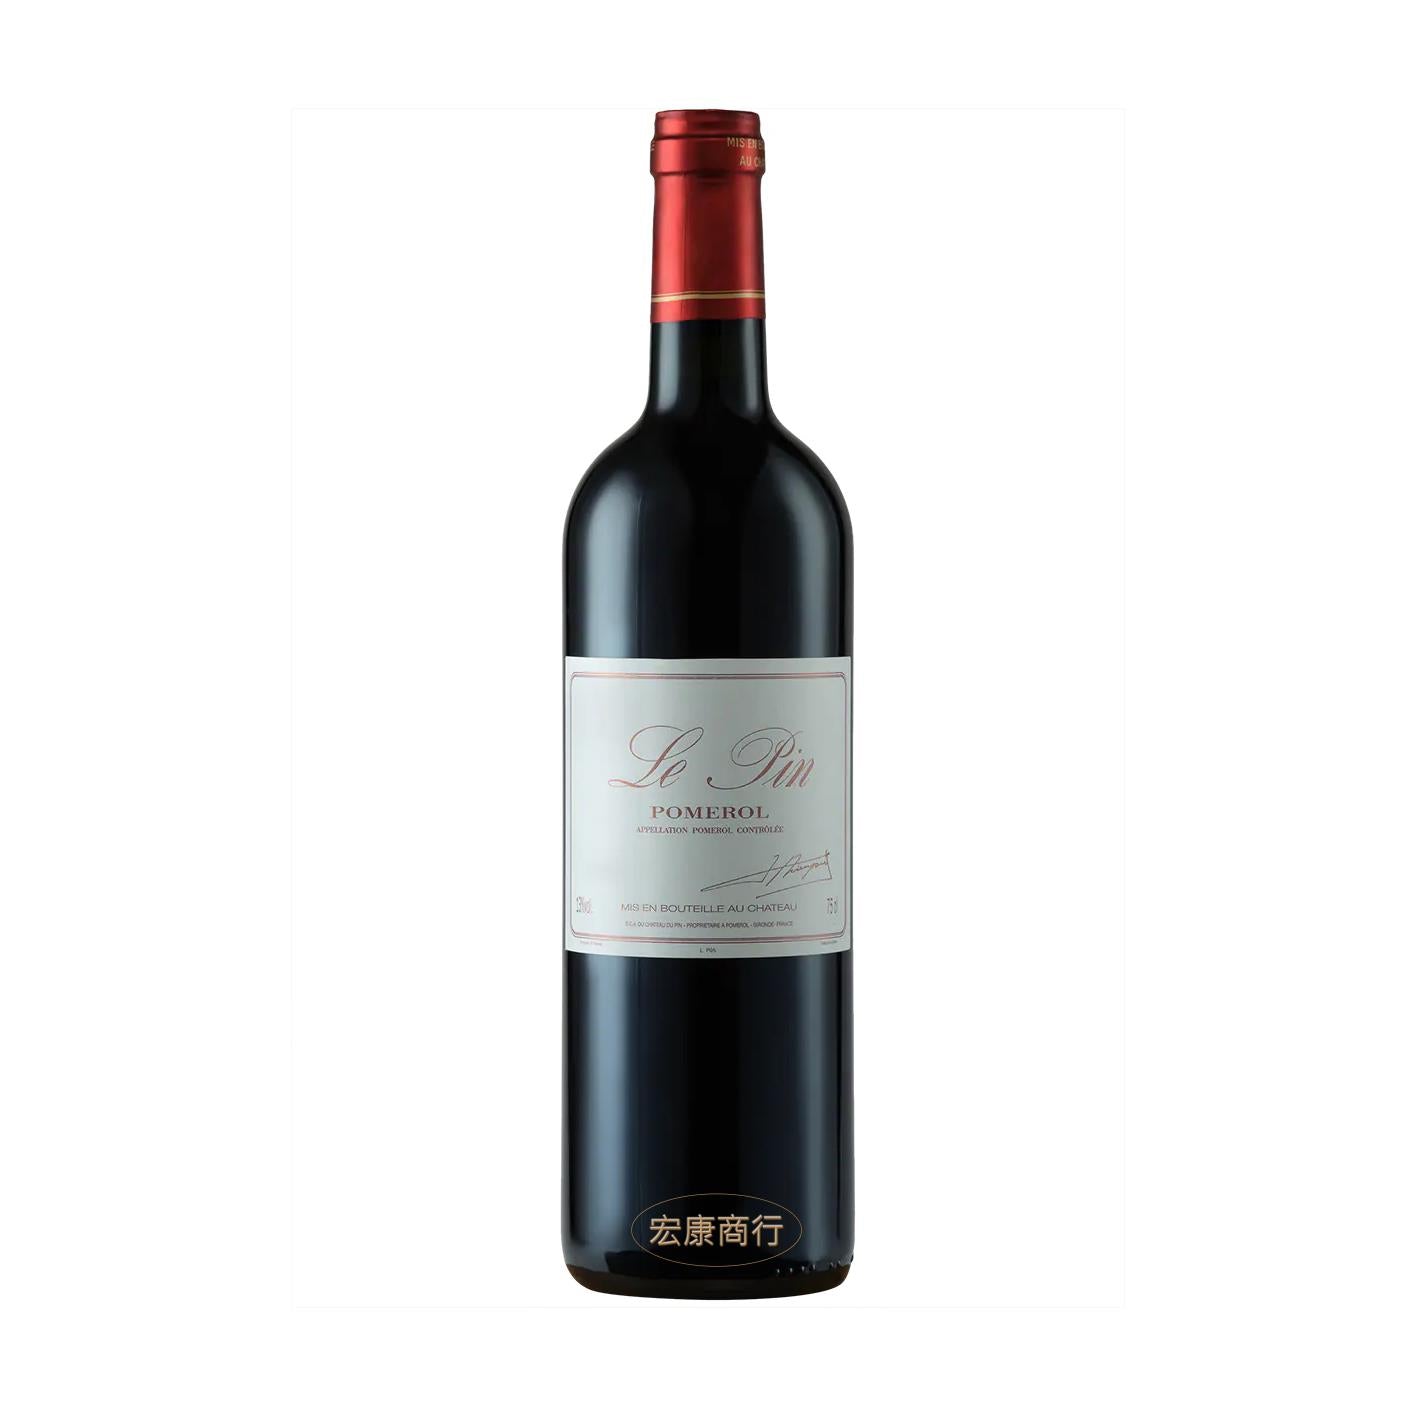 Le Pin Pomerol 2014（裡鵬酒莊紅葡萄酒2014年）收購